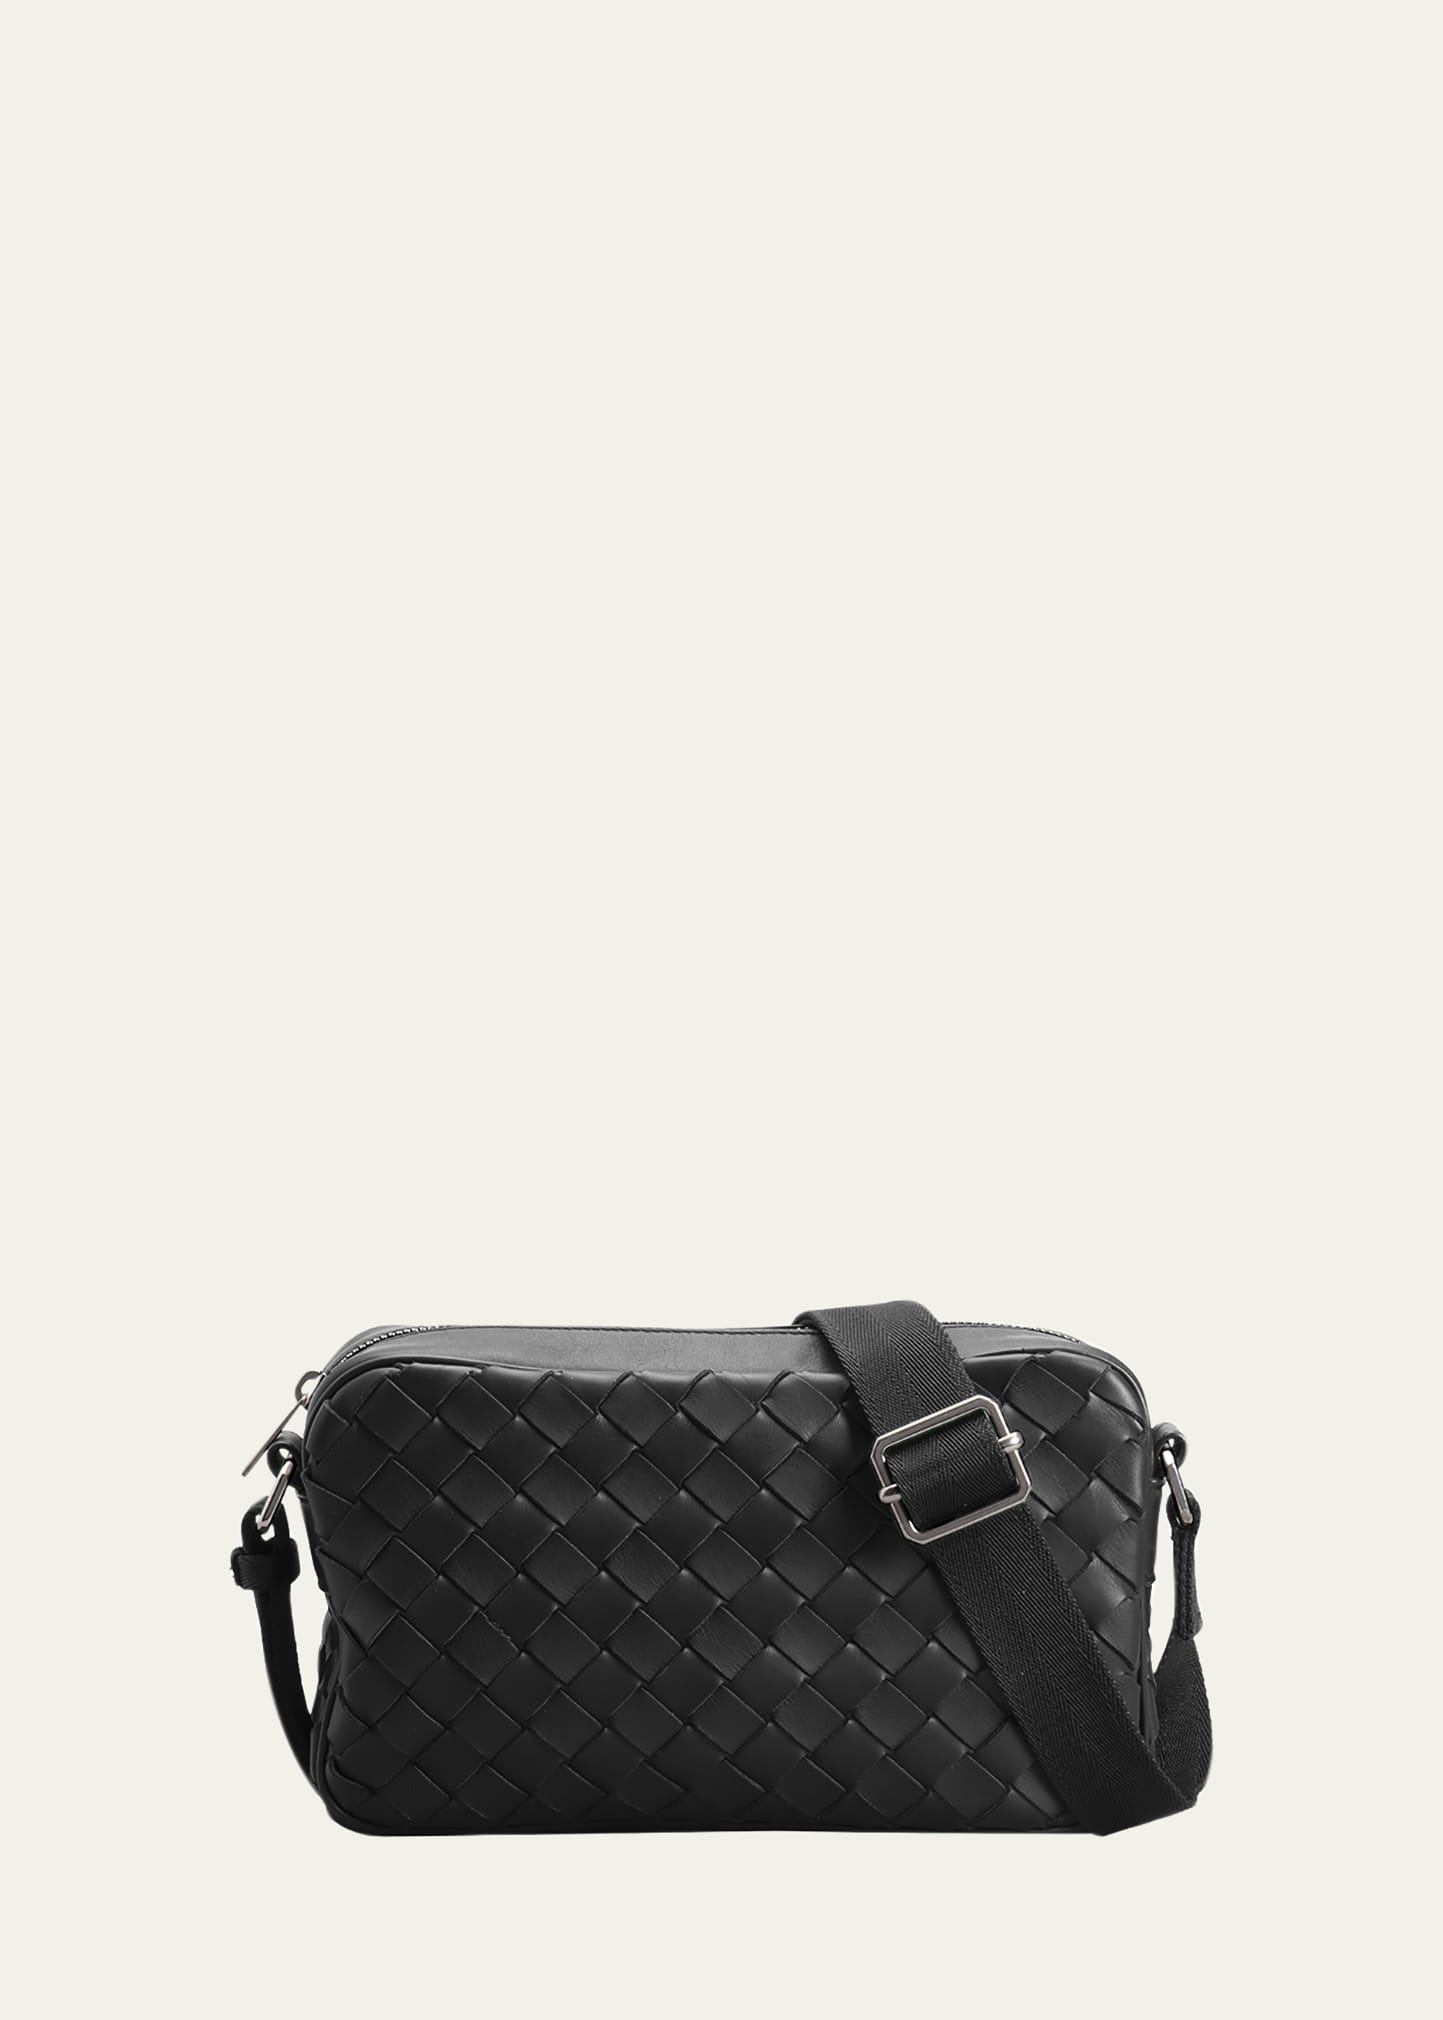 Bottega Veneta Men's Duo Intrecciato Leather Crossbody Bag